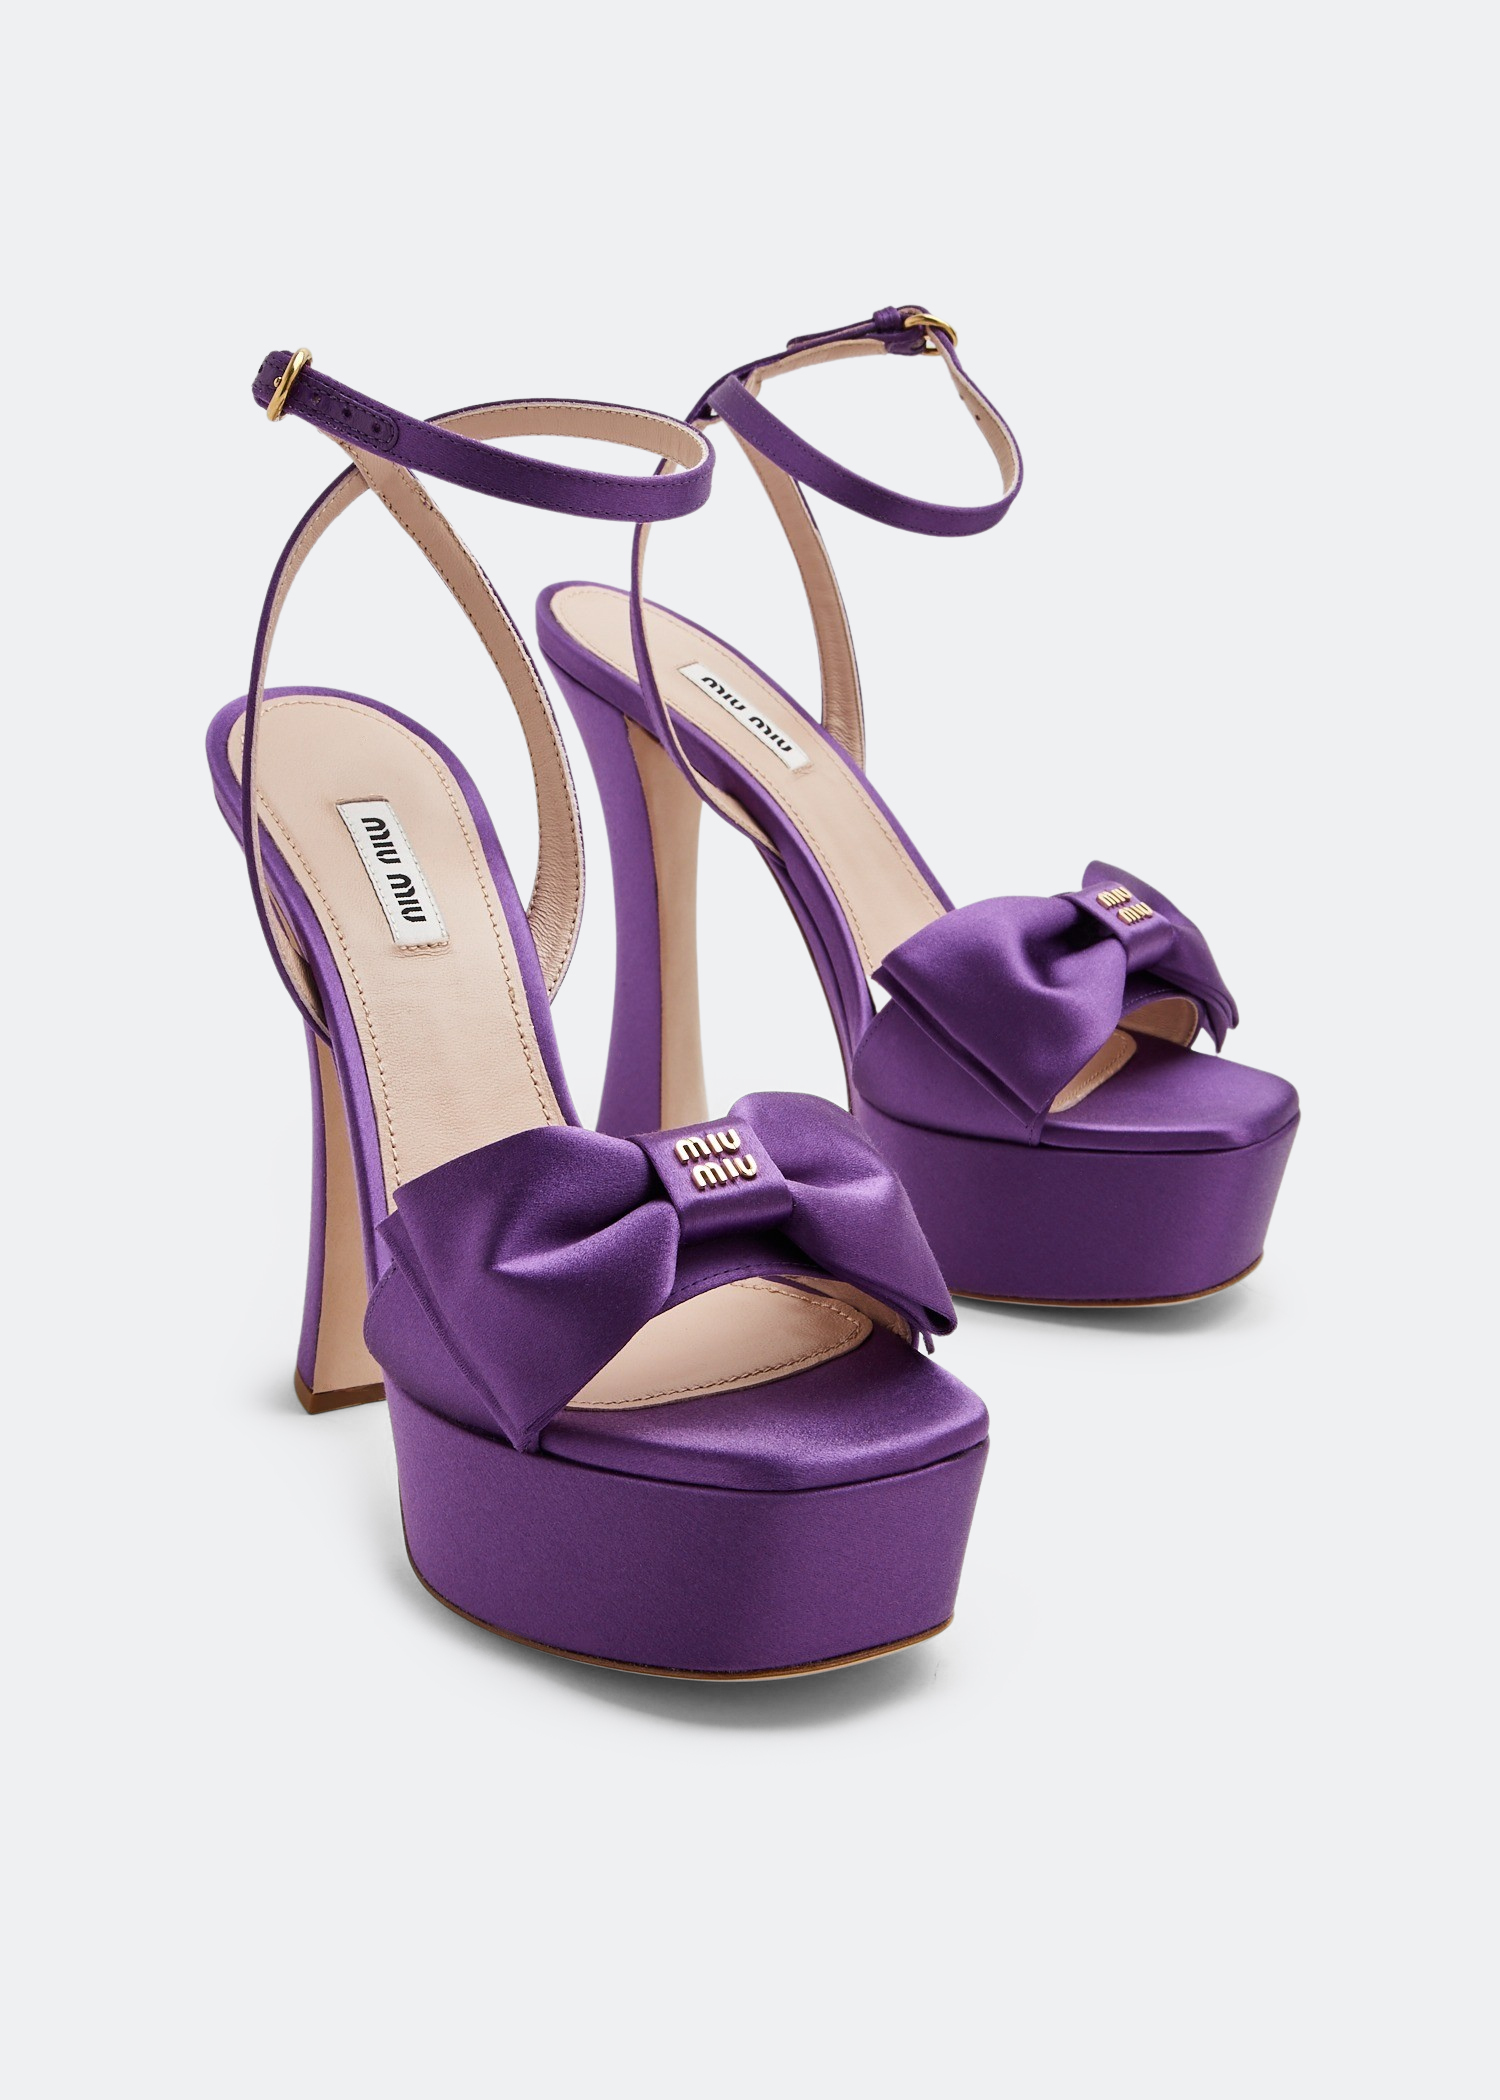 Miu Miu Satin platform sandals for Women - Purple in KSA | Level Shoes